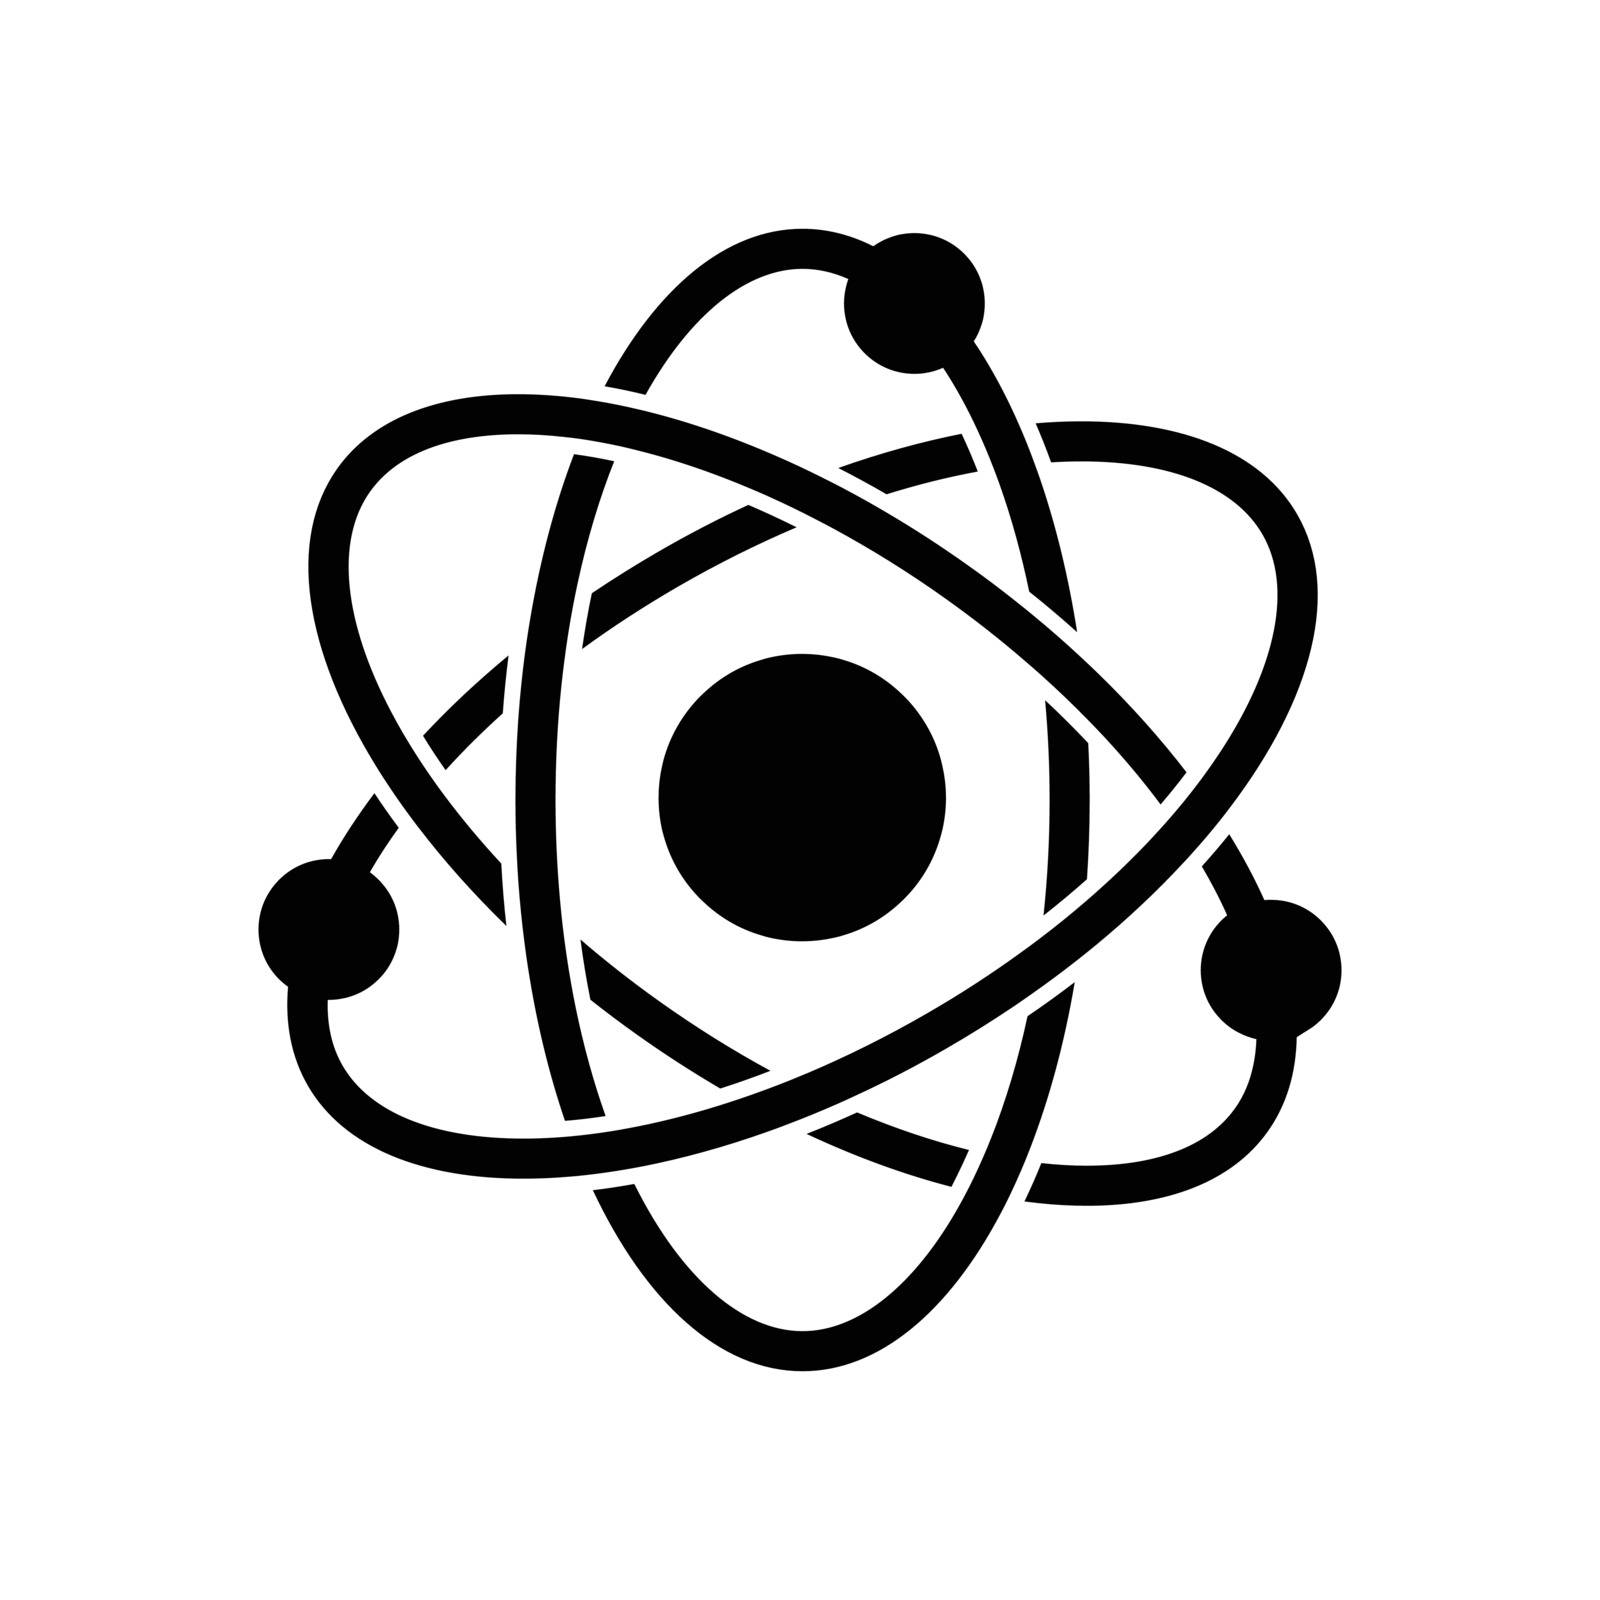  Atom icon, iconic symbol, on white background.  Vector Iconic Design.